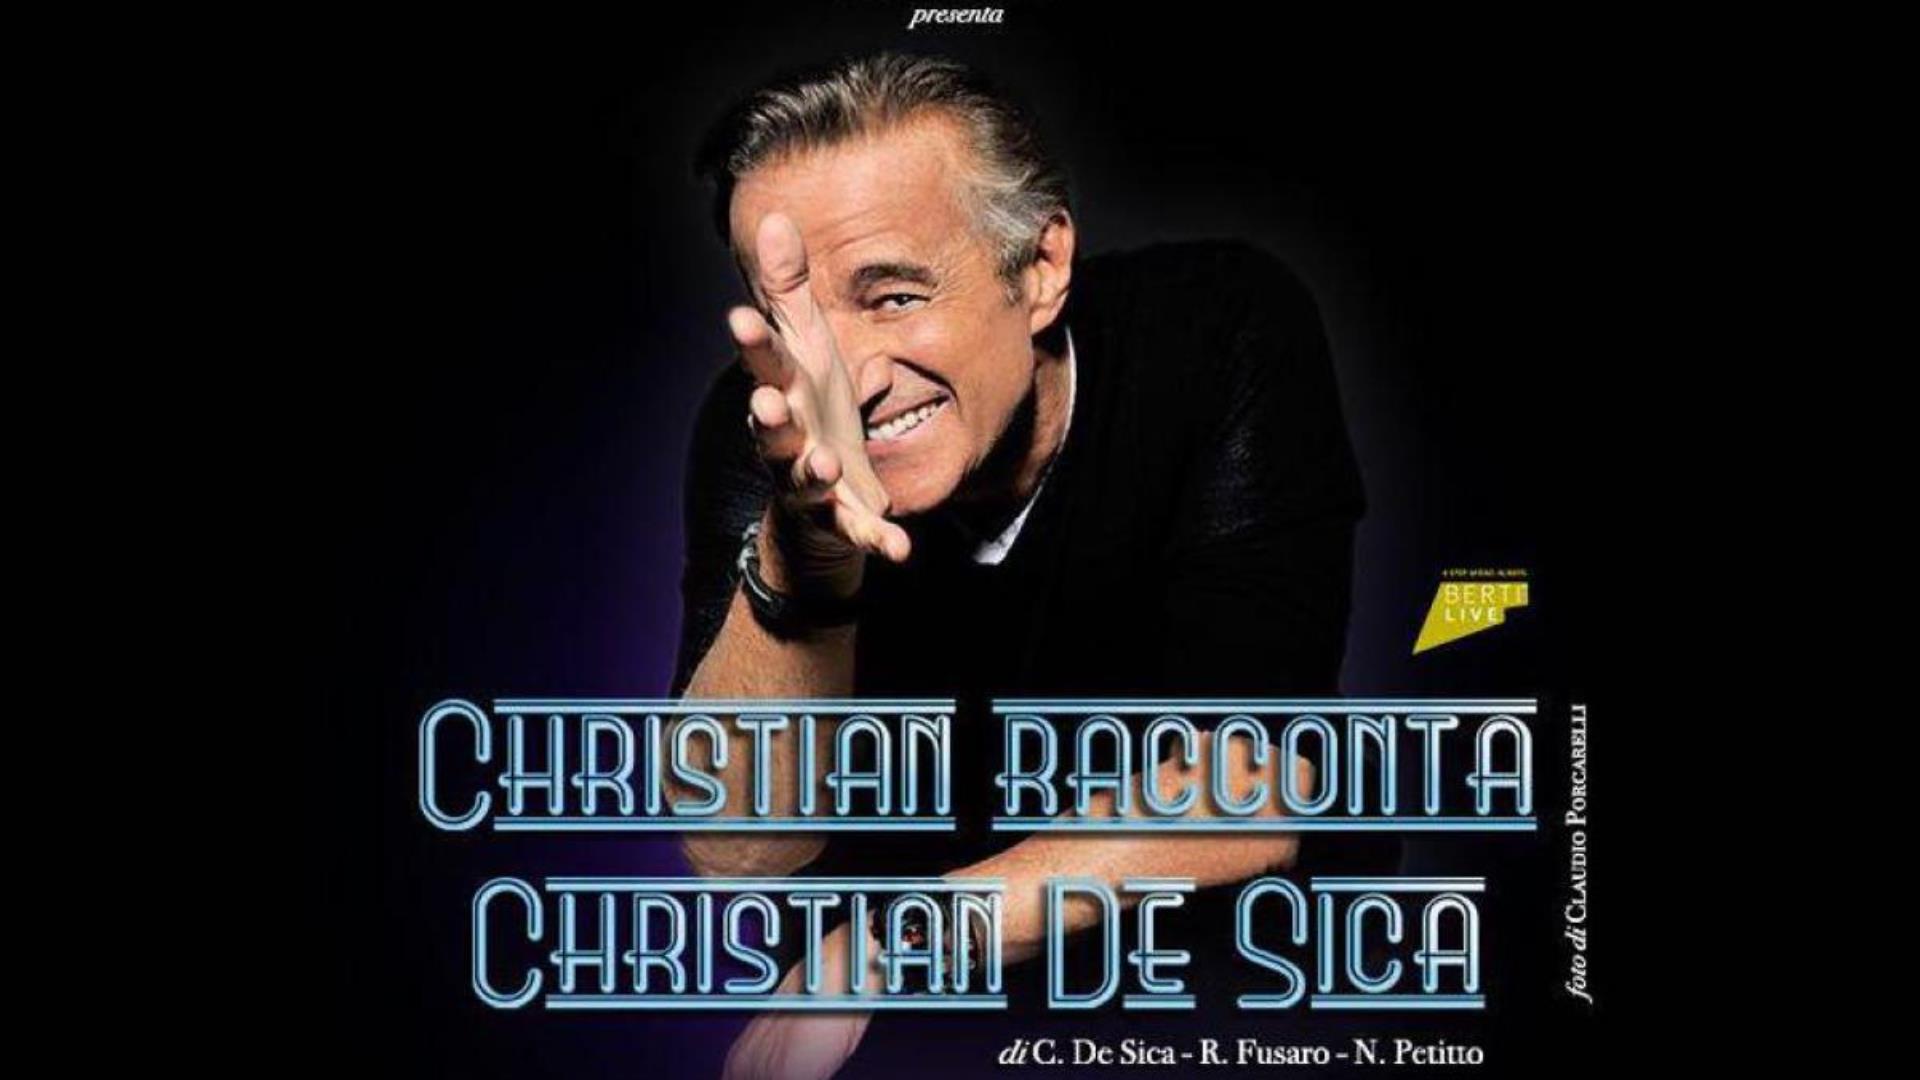 Christian racconta Christian De SIca